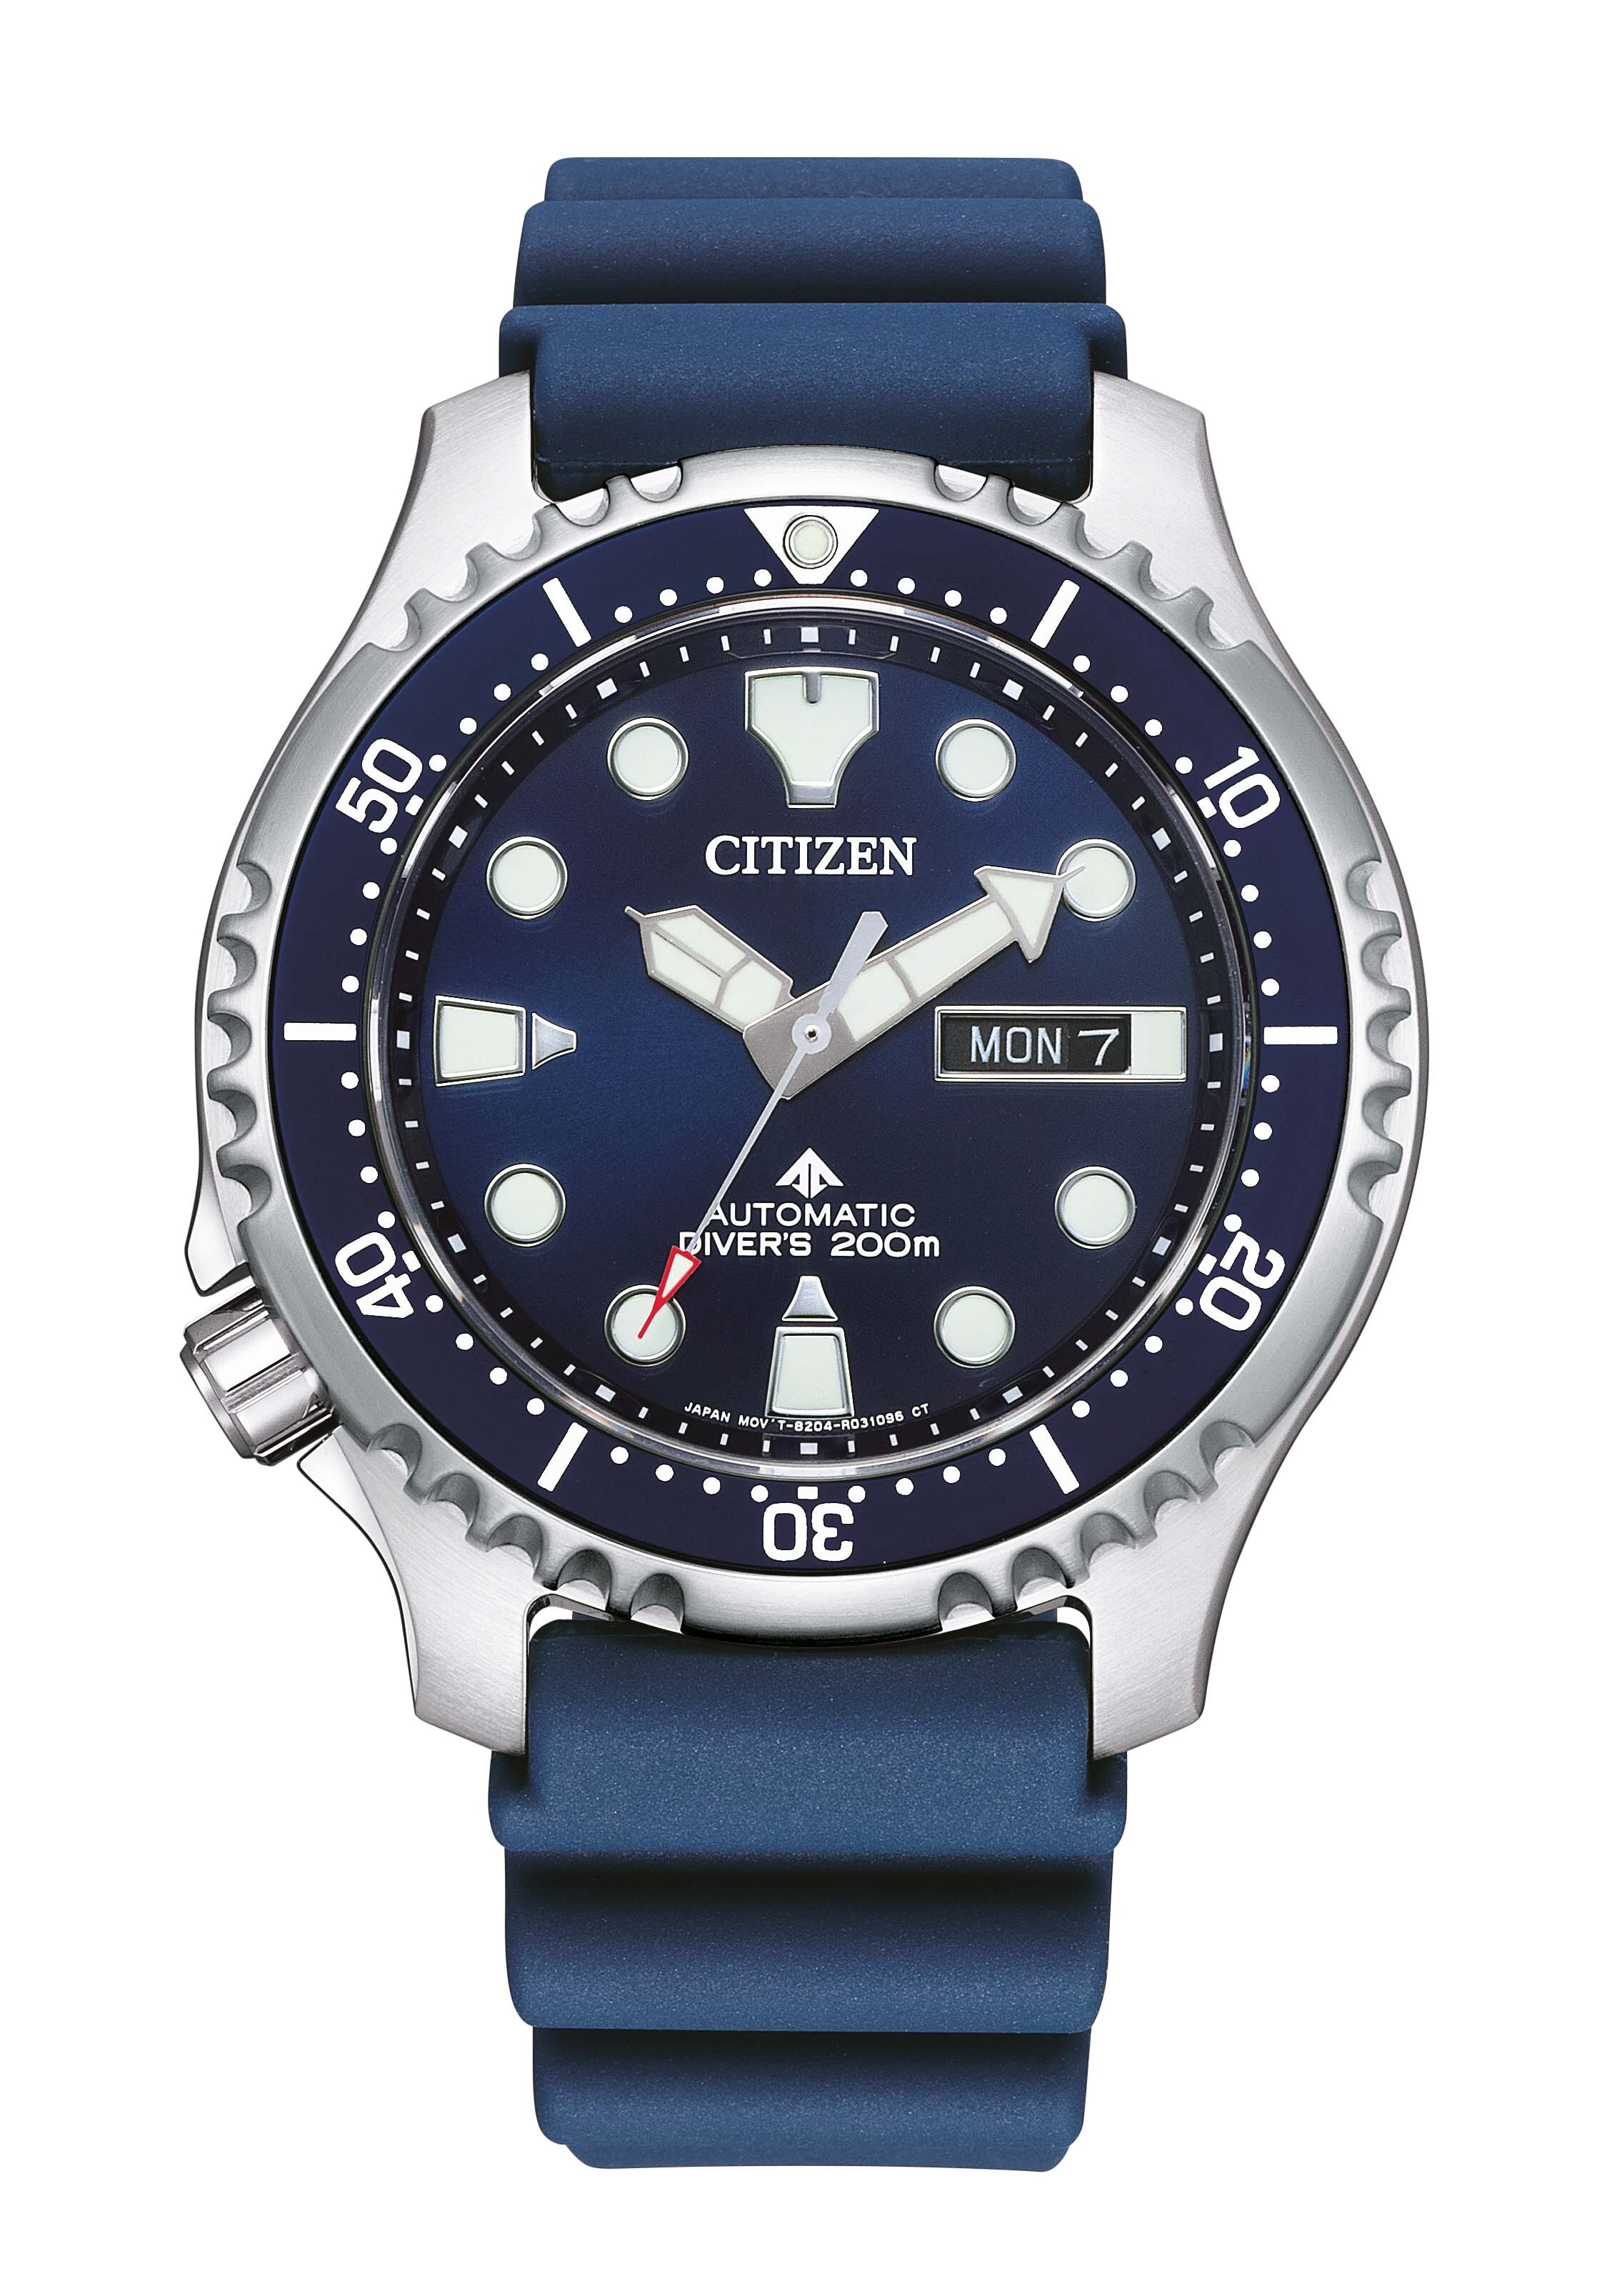 Citizen Promaster Automatic Diver 